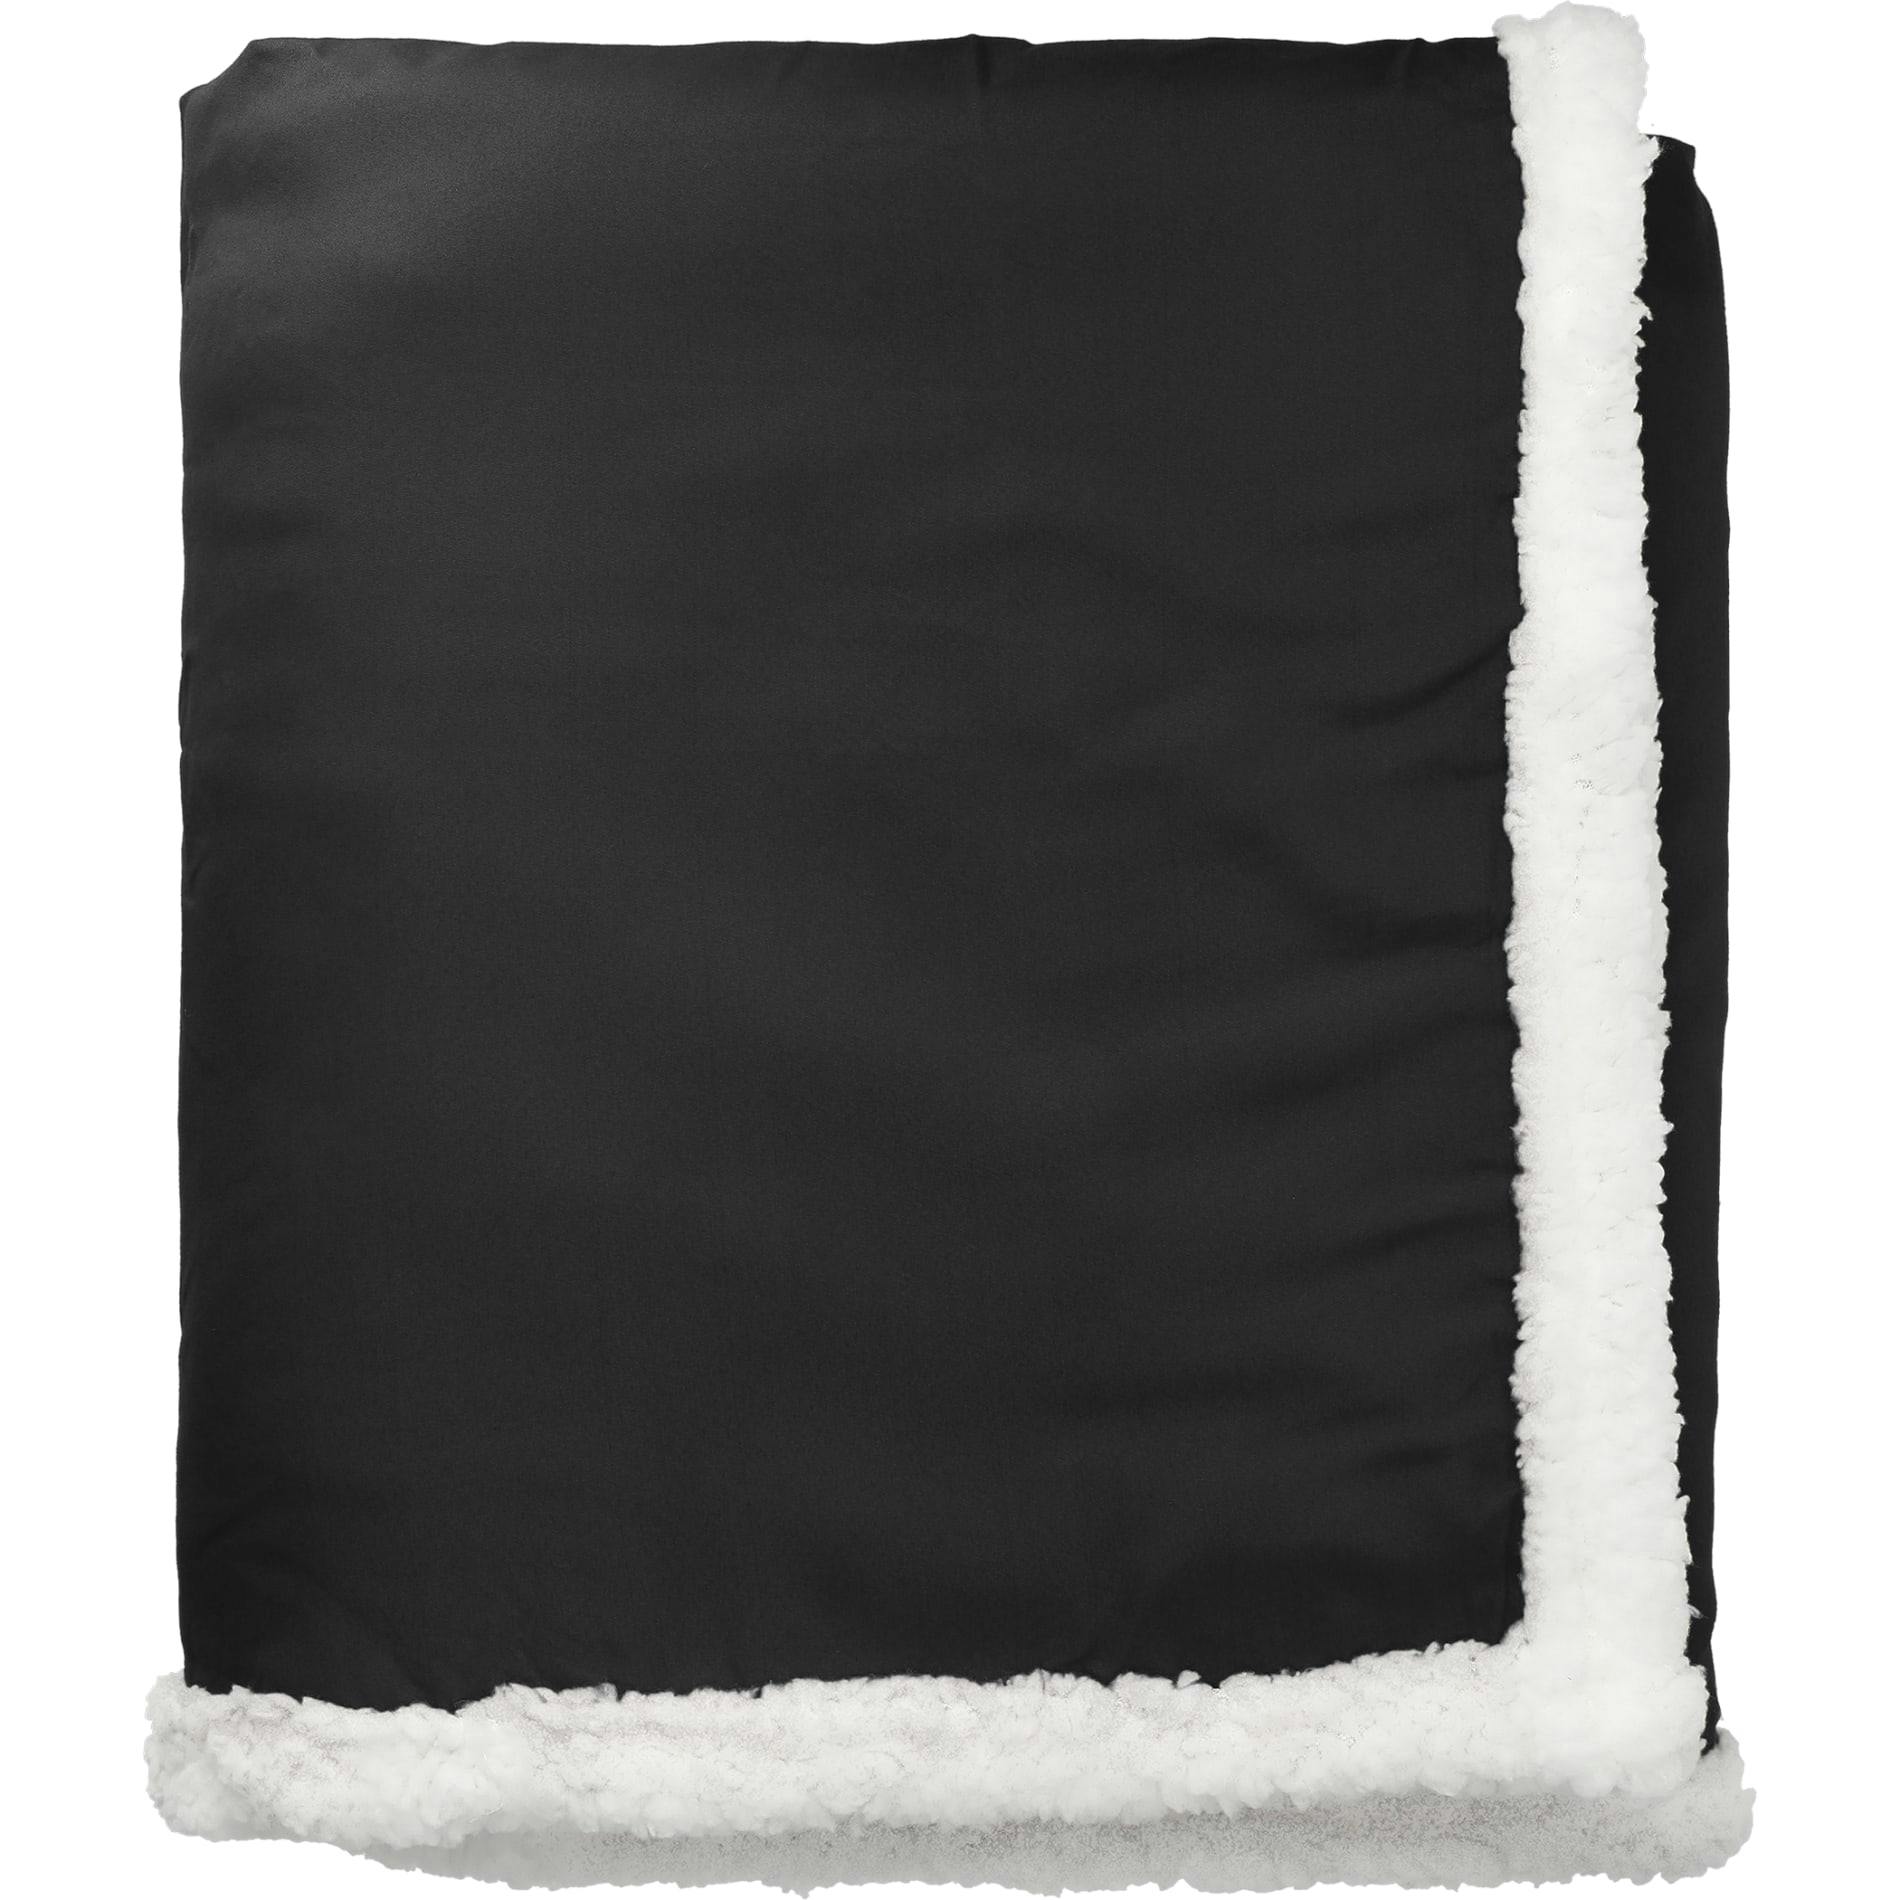 Sherpa Blanket - additional Image 1